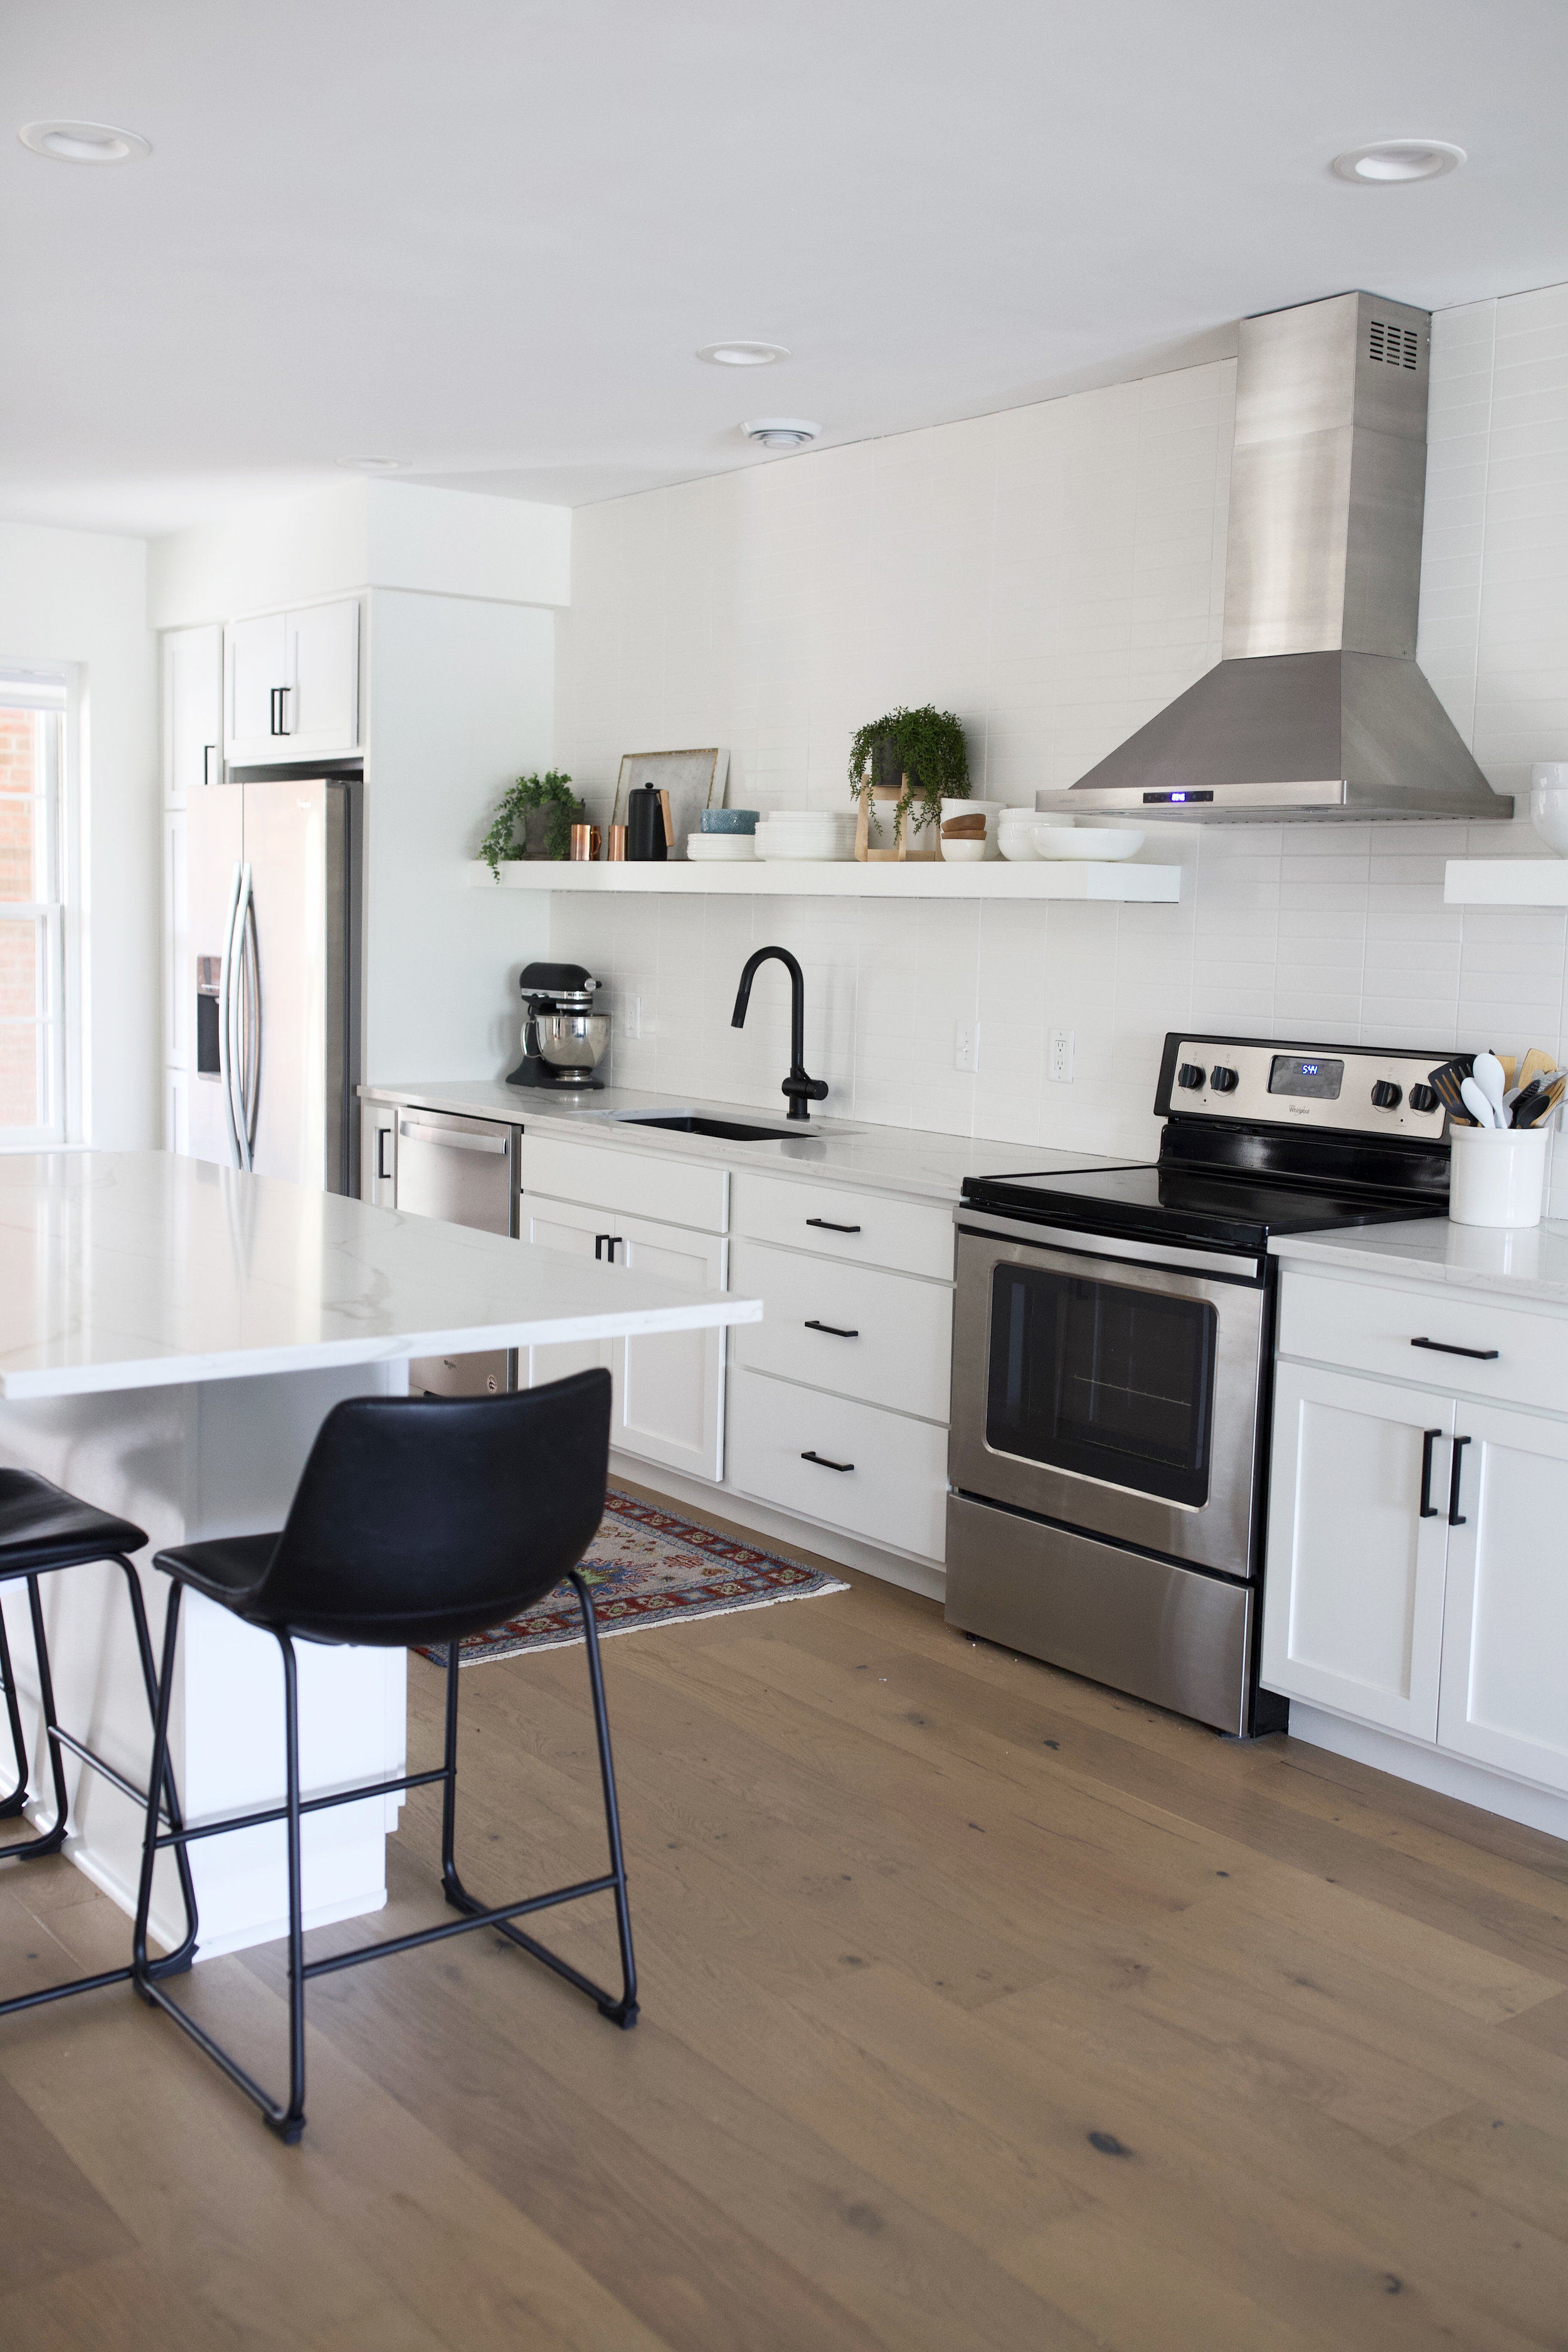  UNIQUE OPEN PLAN KITCHEN LAYOUT IDEAS FOR 2020 | VIGO Industries - Kitchen Sinks and Faucets Design Ideas - Home Interior 